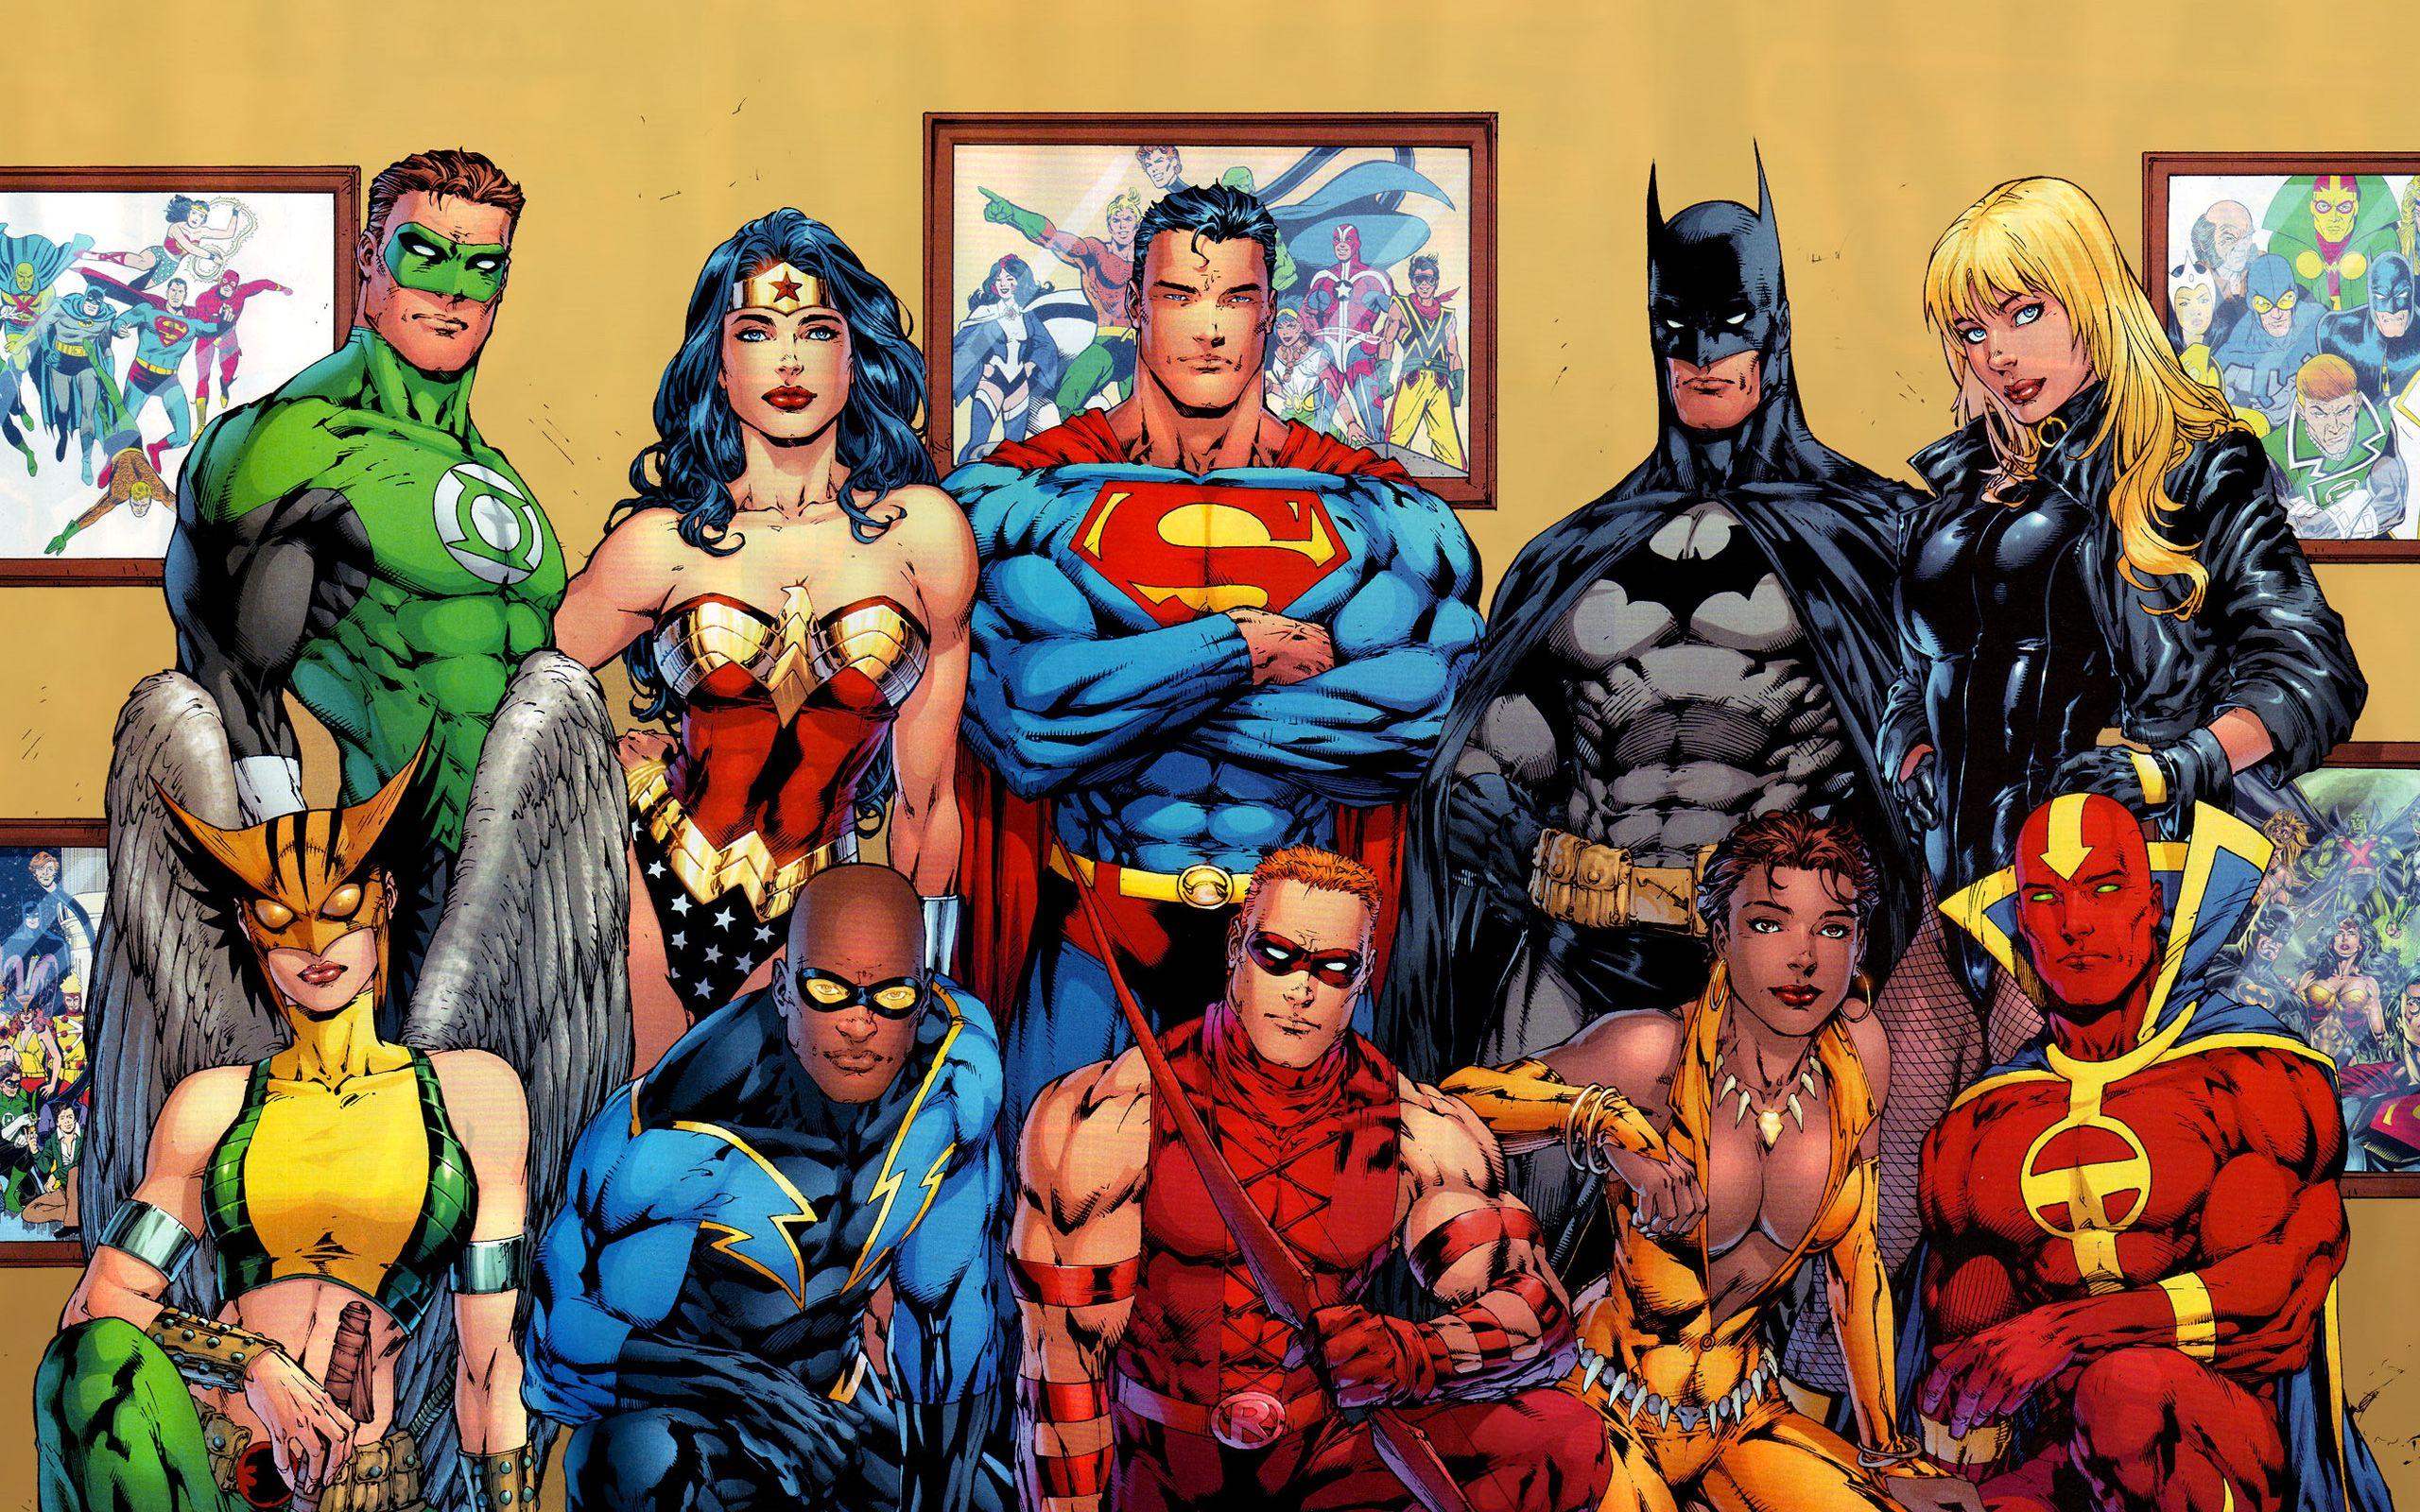 Justice League Hd Desktop Wallpapers Top Free Justice League Hd